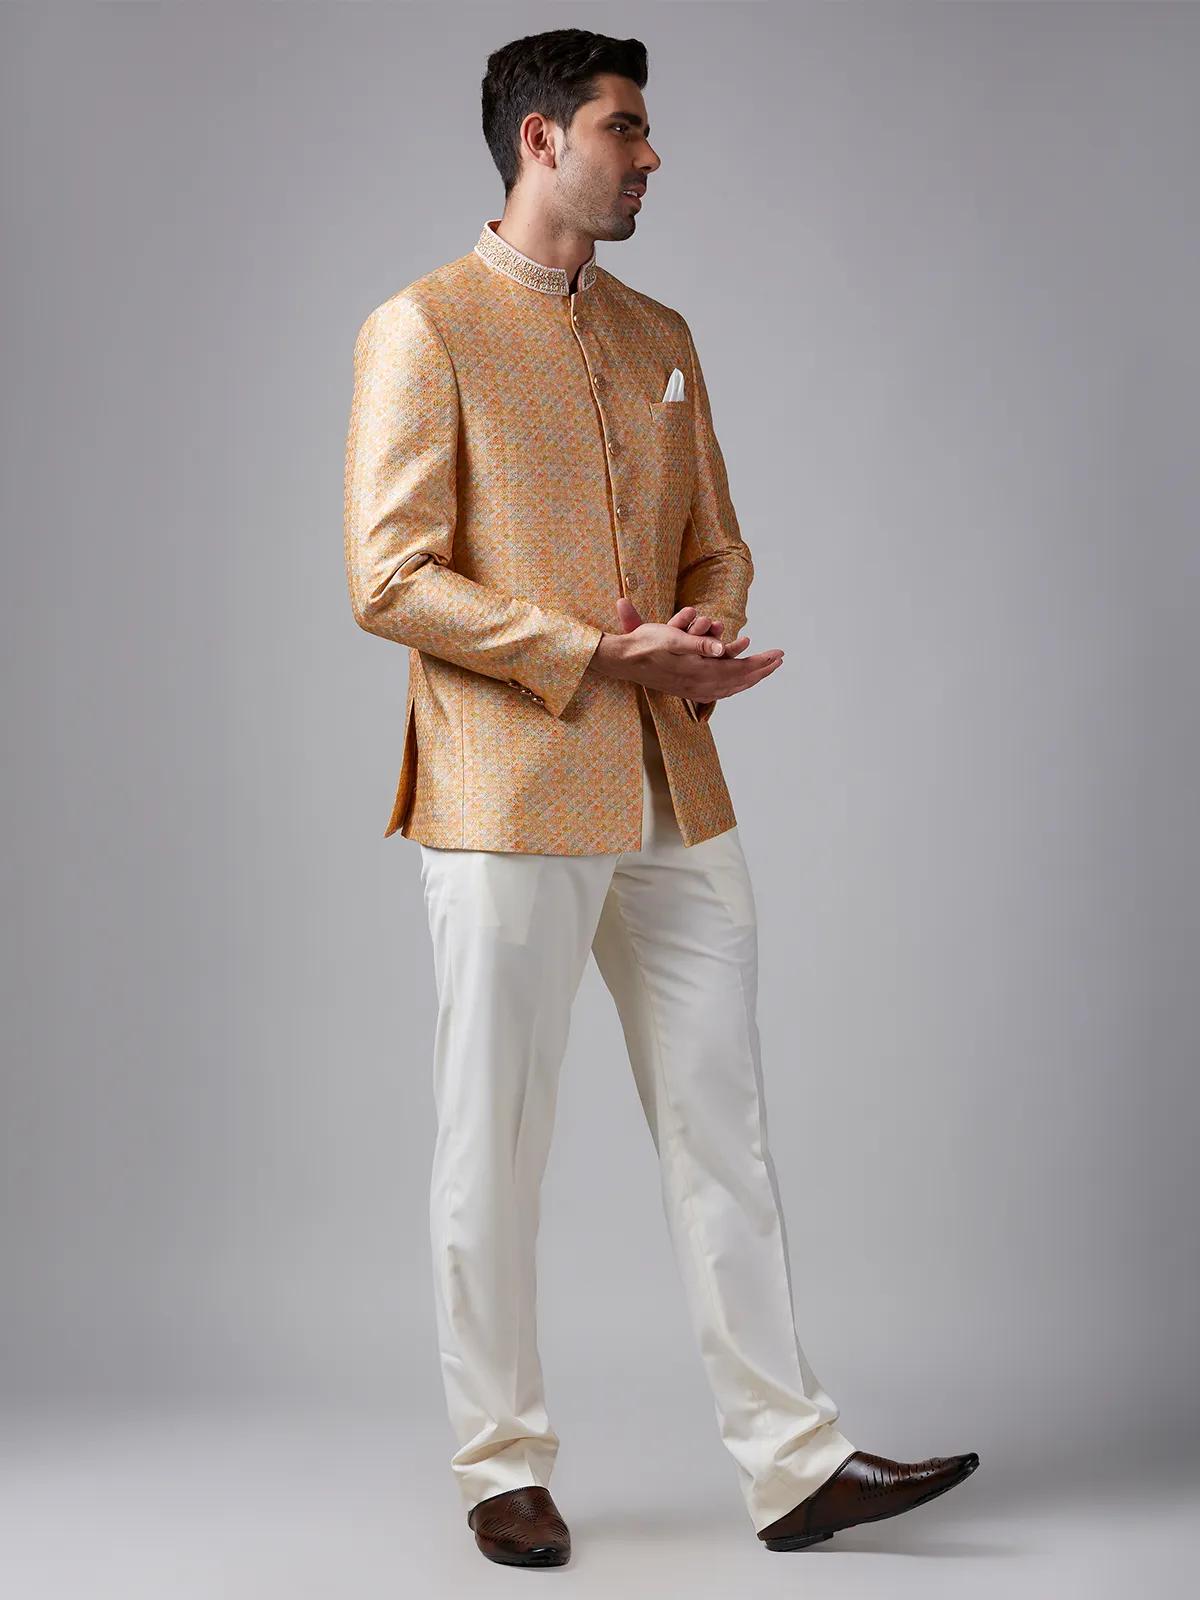 Orange silk texture jodhpuri suit